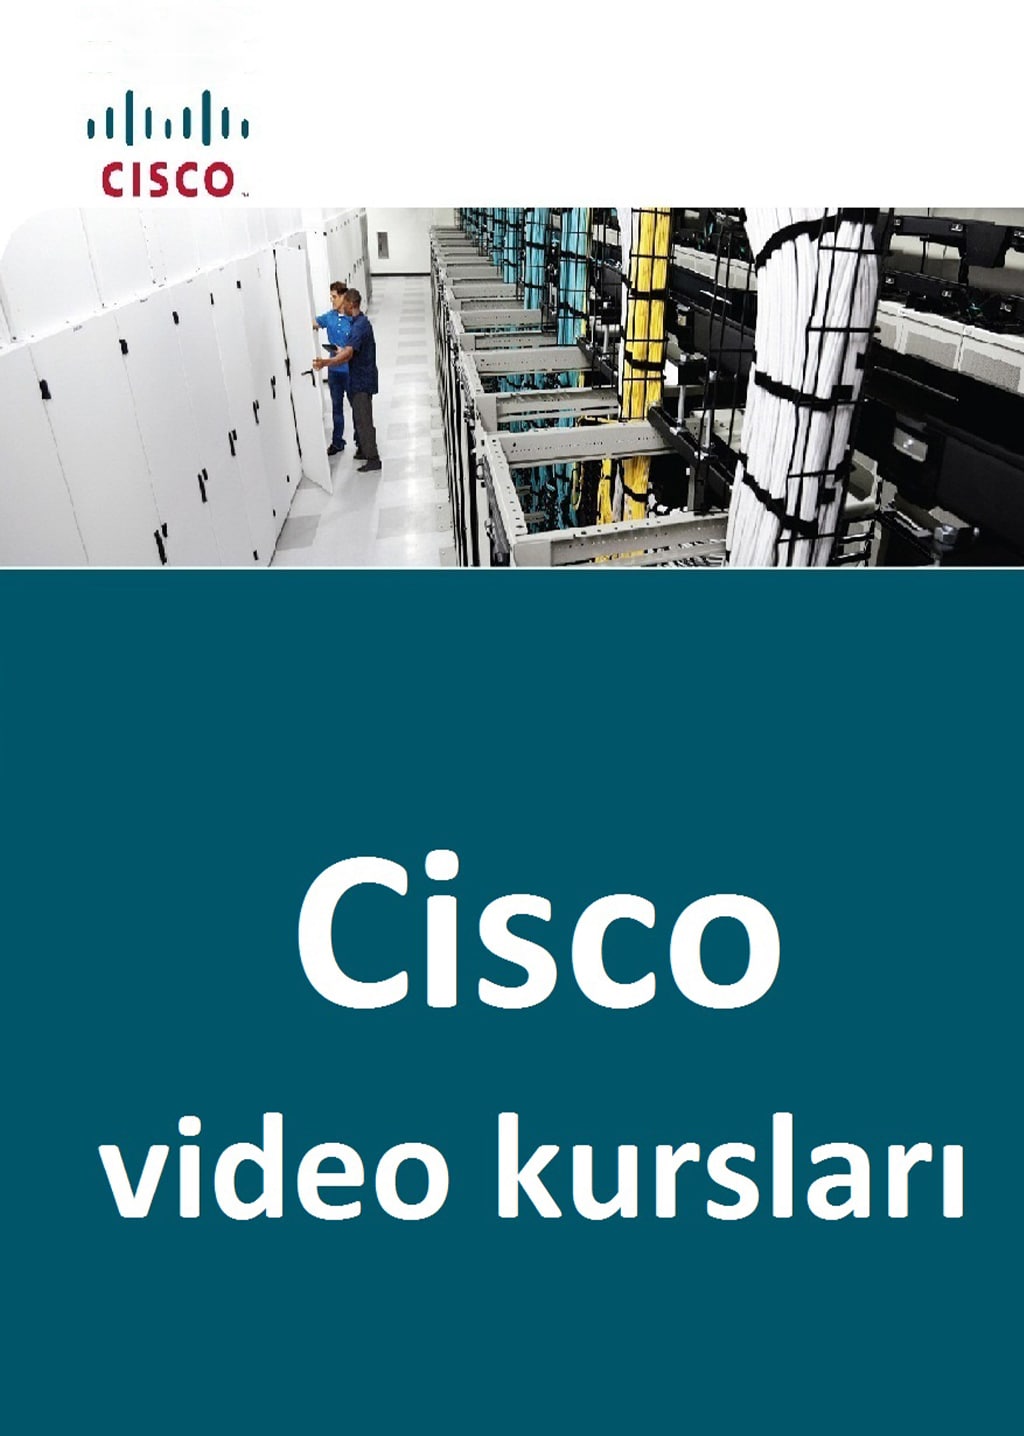 Cisco video kurslari